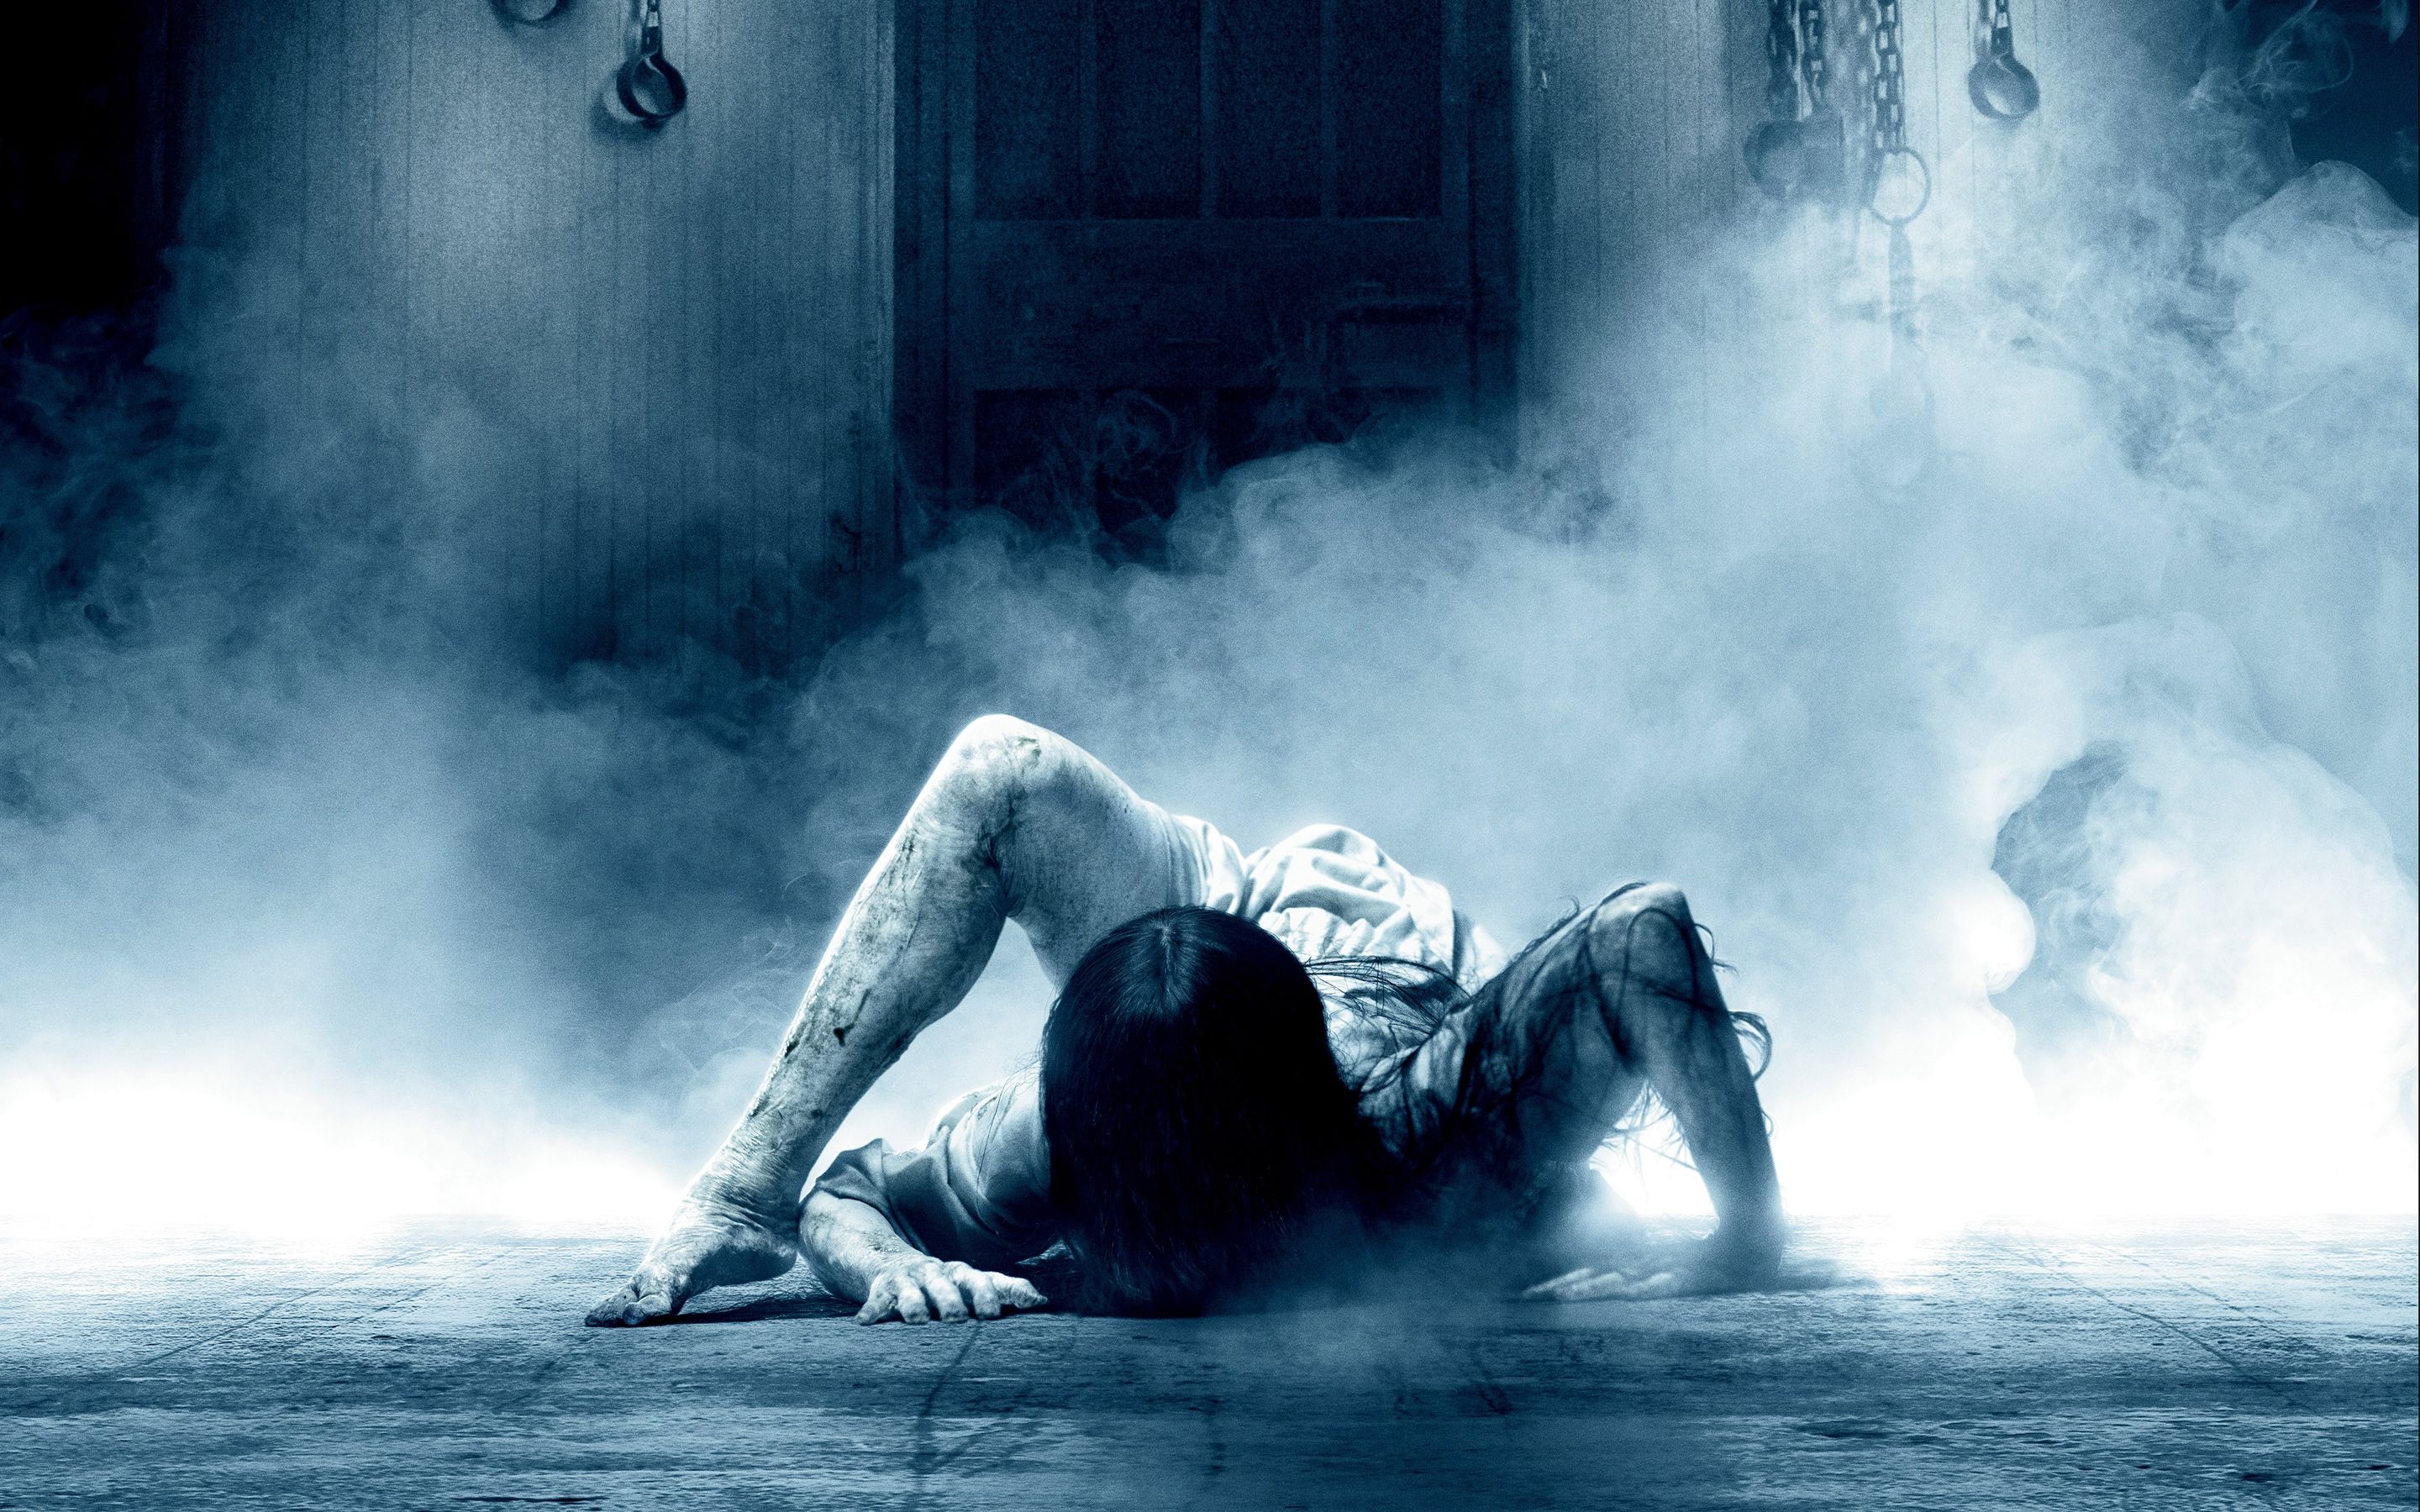 General 2880x1800 ghost women horror movies flexible contortionists blue smoke on the floor indoors digital art